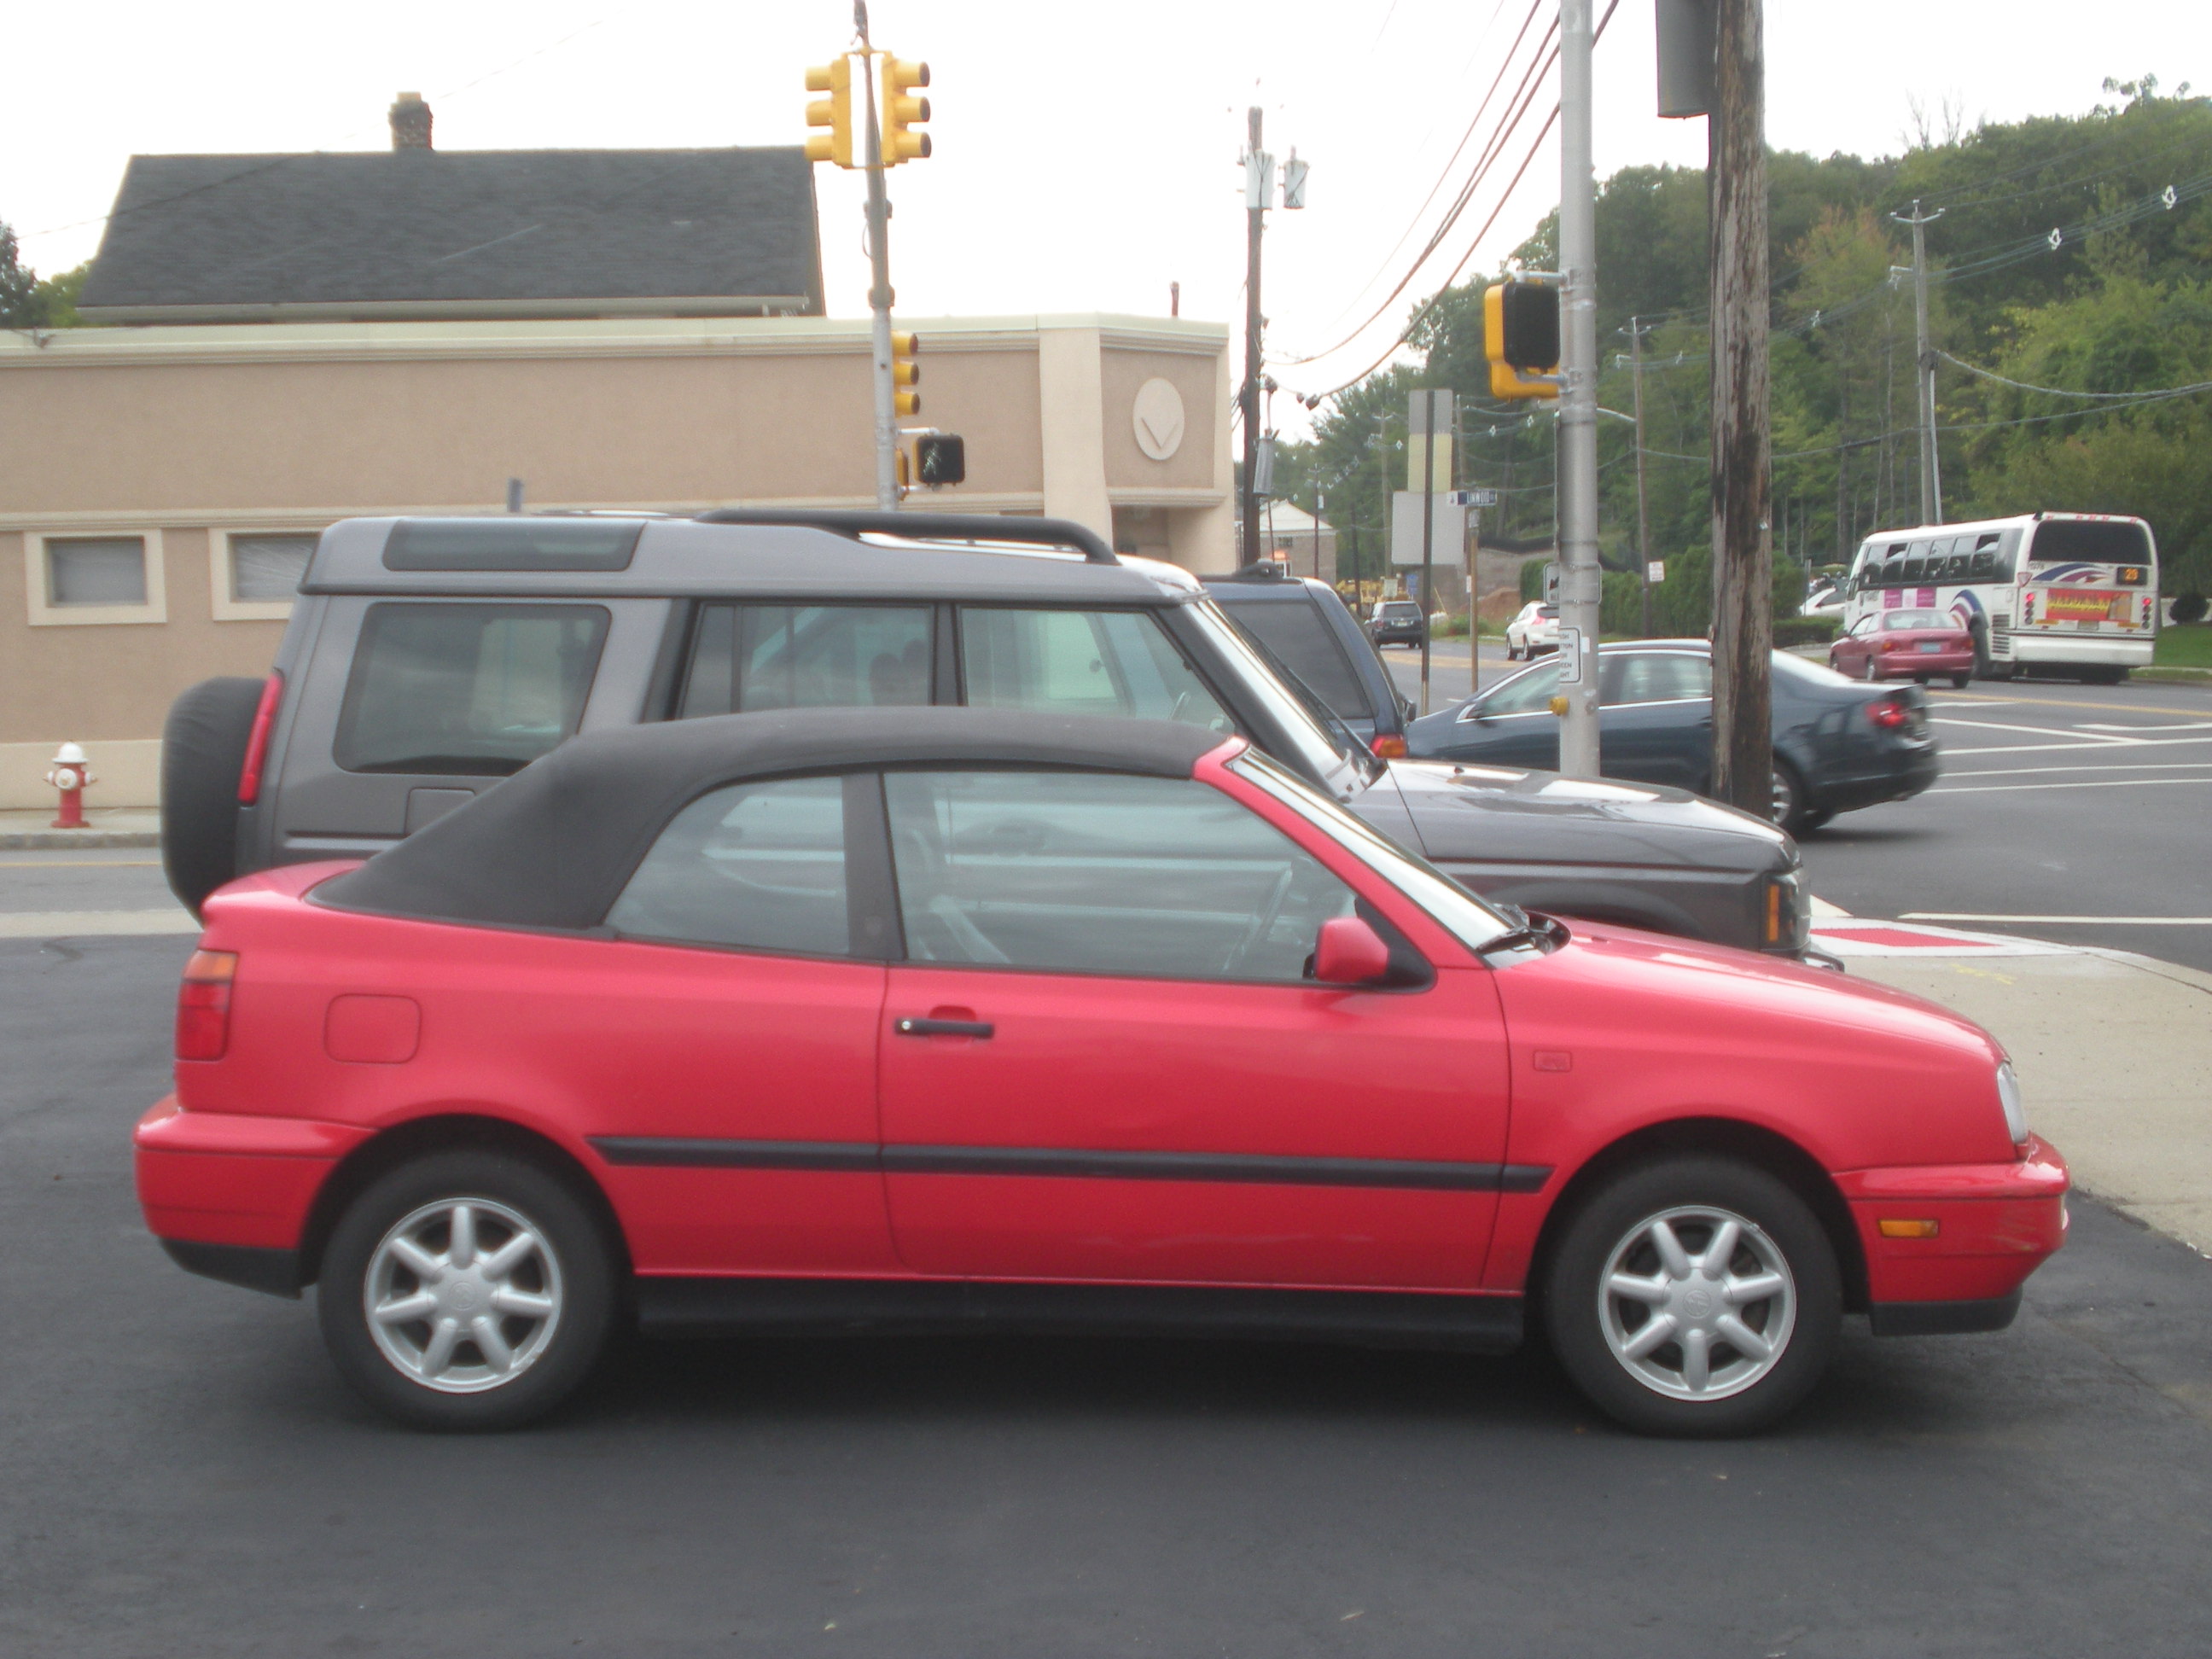 Red Volkswagen Cabrio - Closed | Flickr - Photo Sharing!